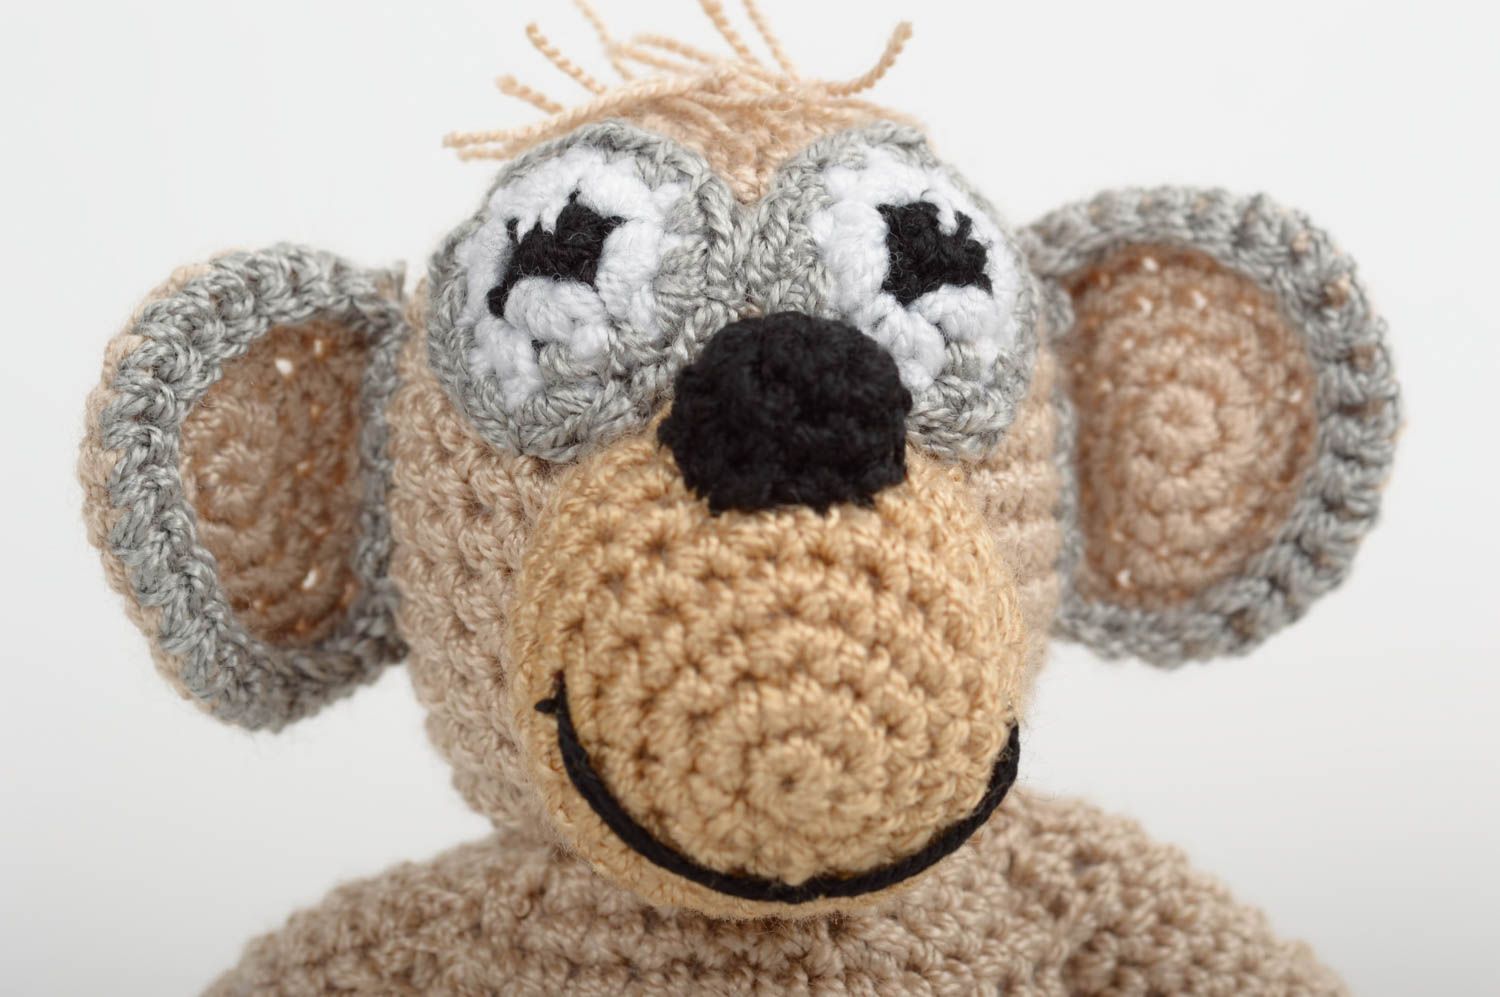 Handmade toy crochet stuffed animals nursery decor gift ideas for kids photo 3